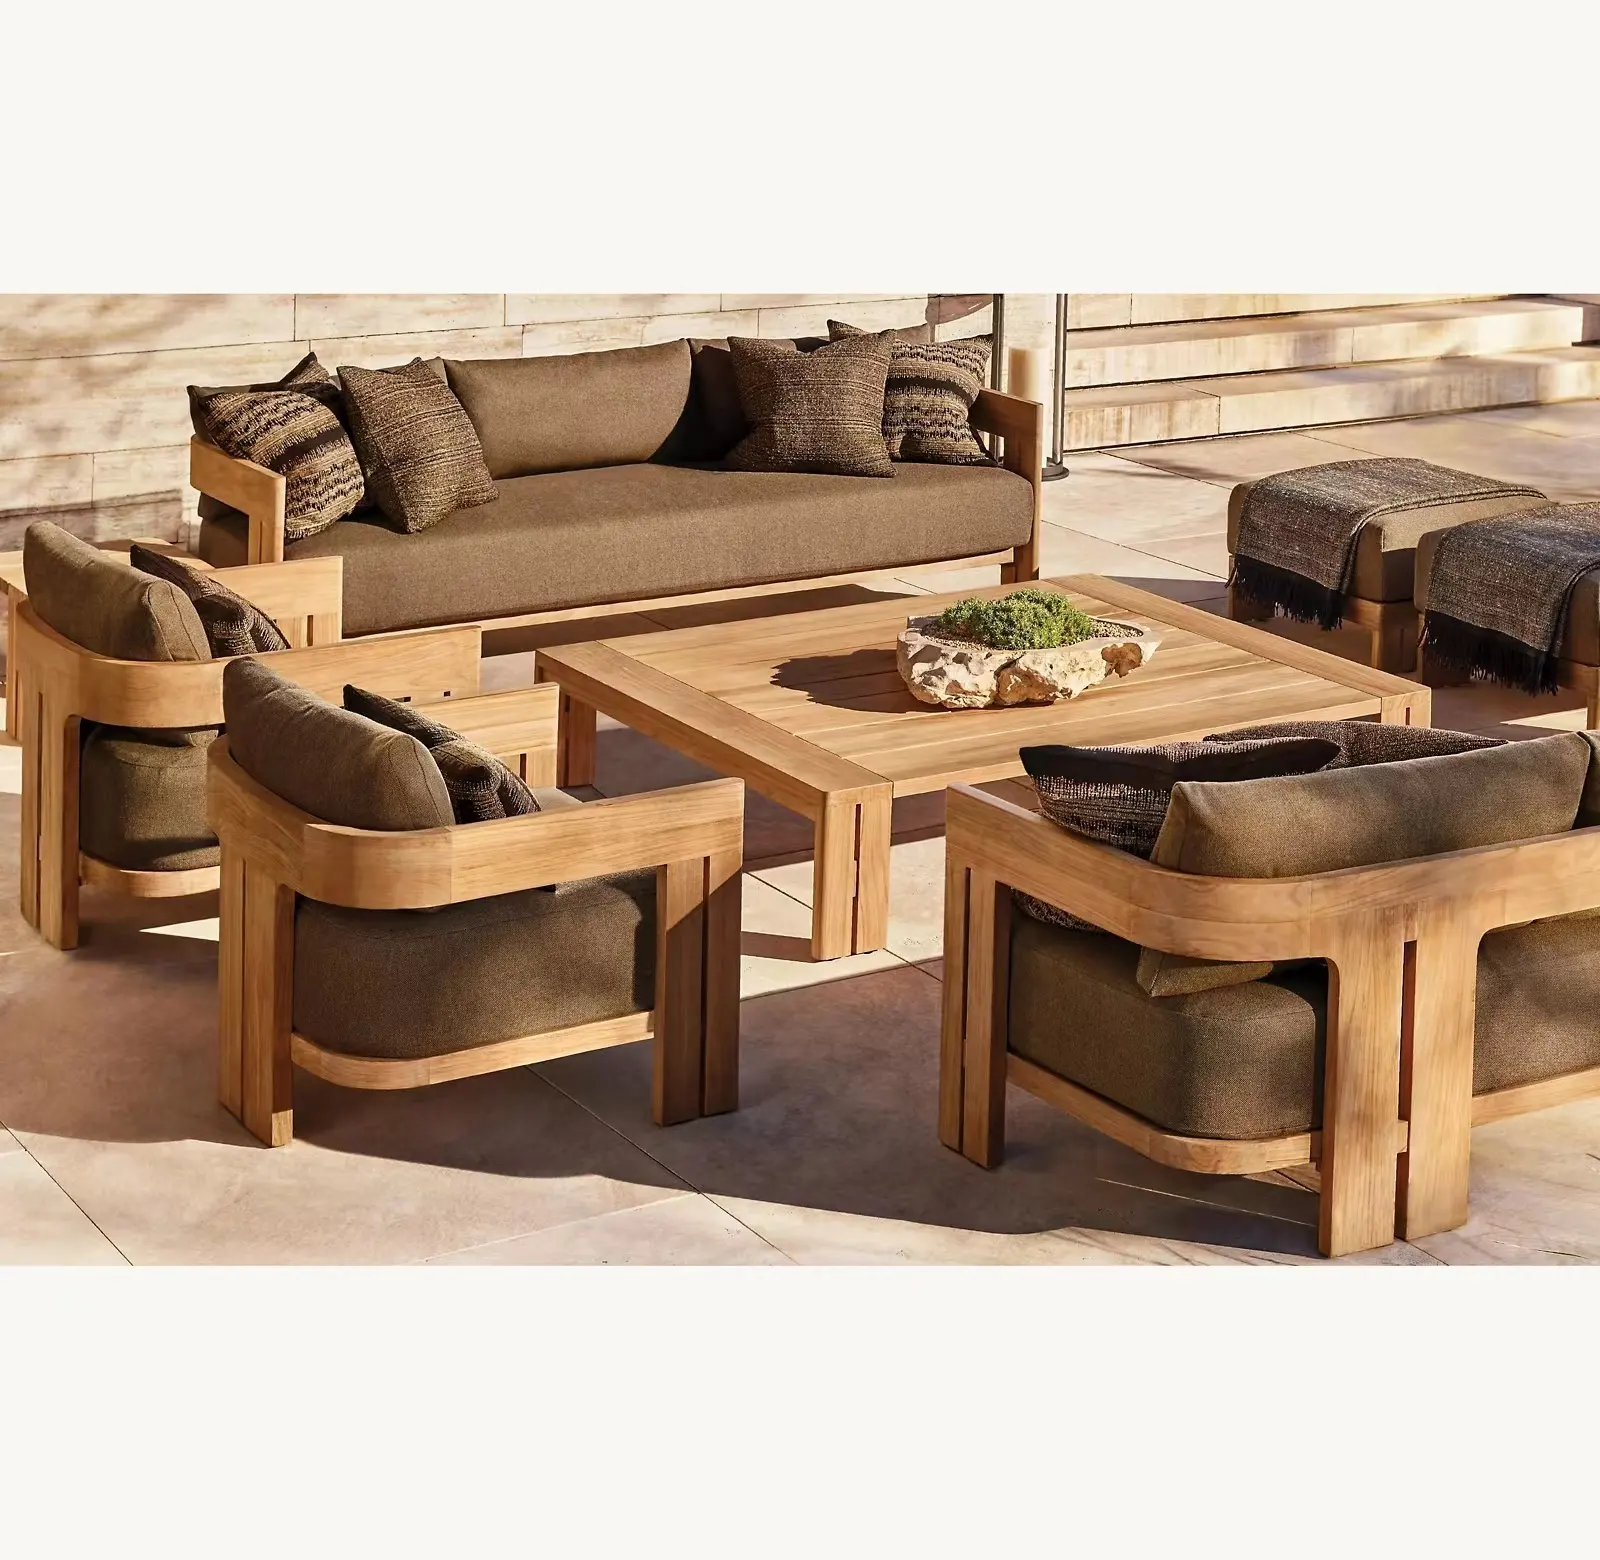 Patio Furniture Luxurious Outdoor Garden Lounge Set Outdoor Teak Sofa And wooden Furniture